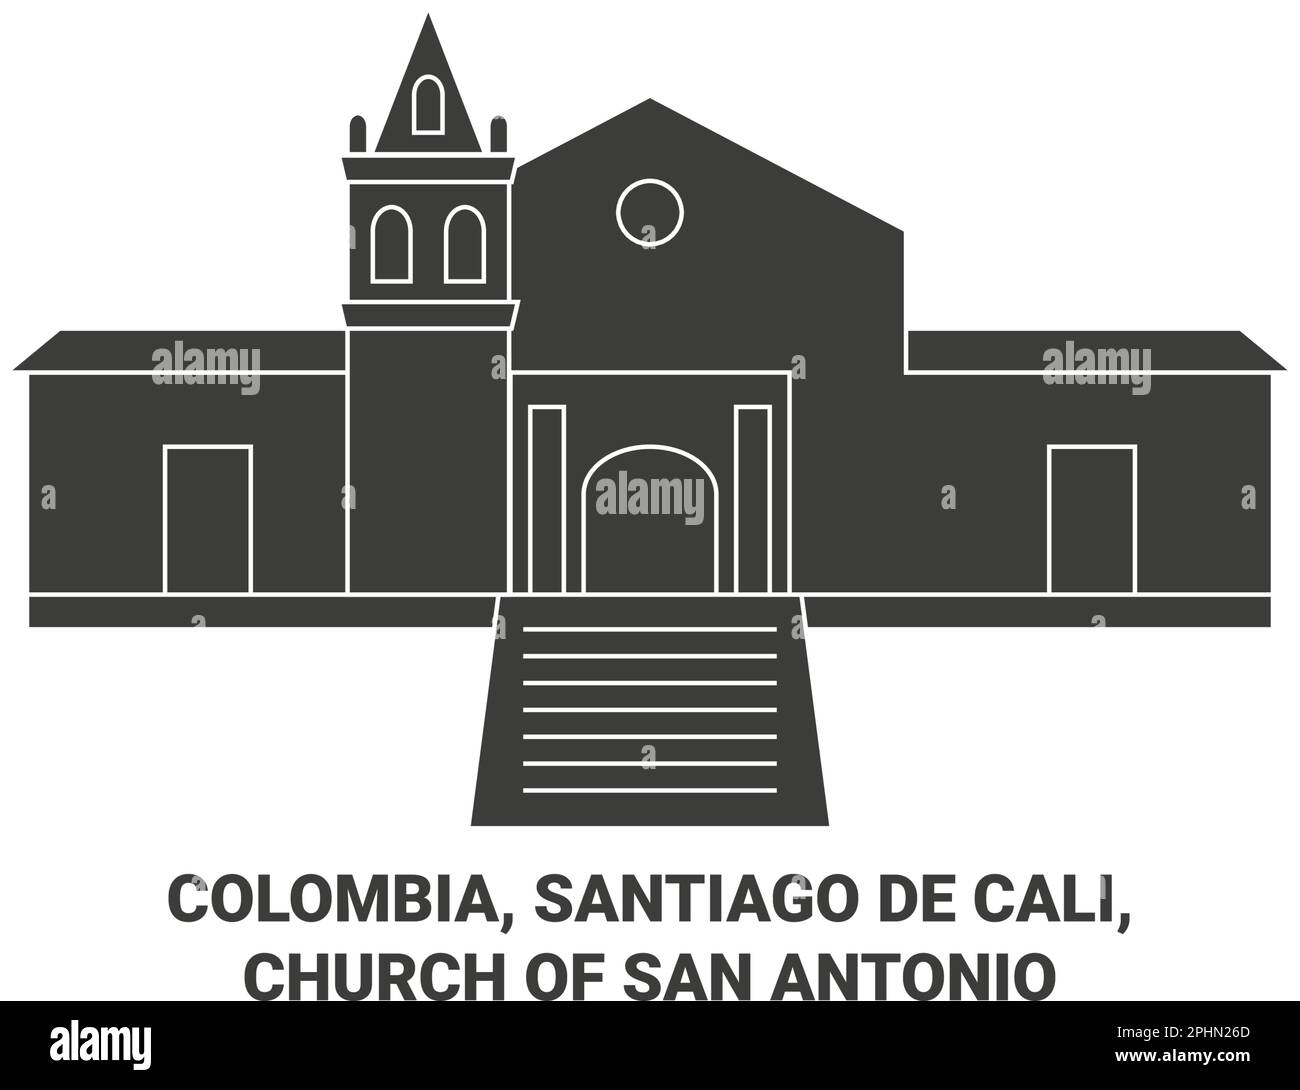 Colombia, Santiago De Cali, Church Of San Antonio travel landmark vector illustration Stock Vector